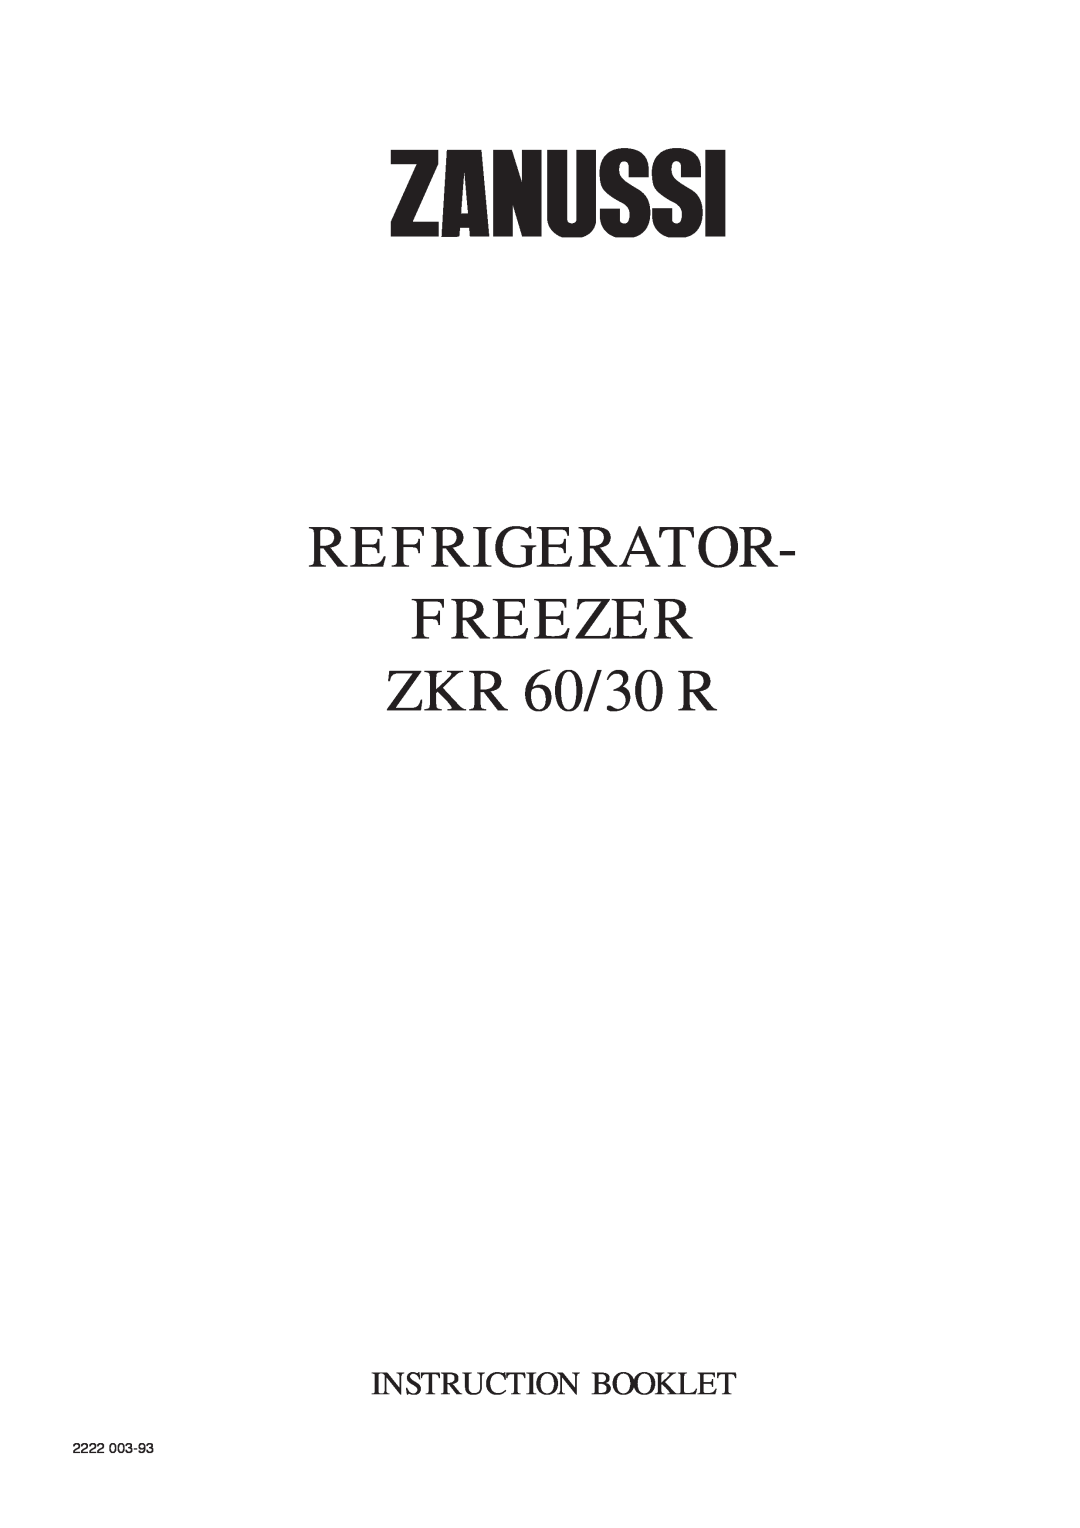 Zanussi manual REFRIGERATOR FREEZER ZKR 60/30 R, Instruction Booklet, 2222 